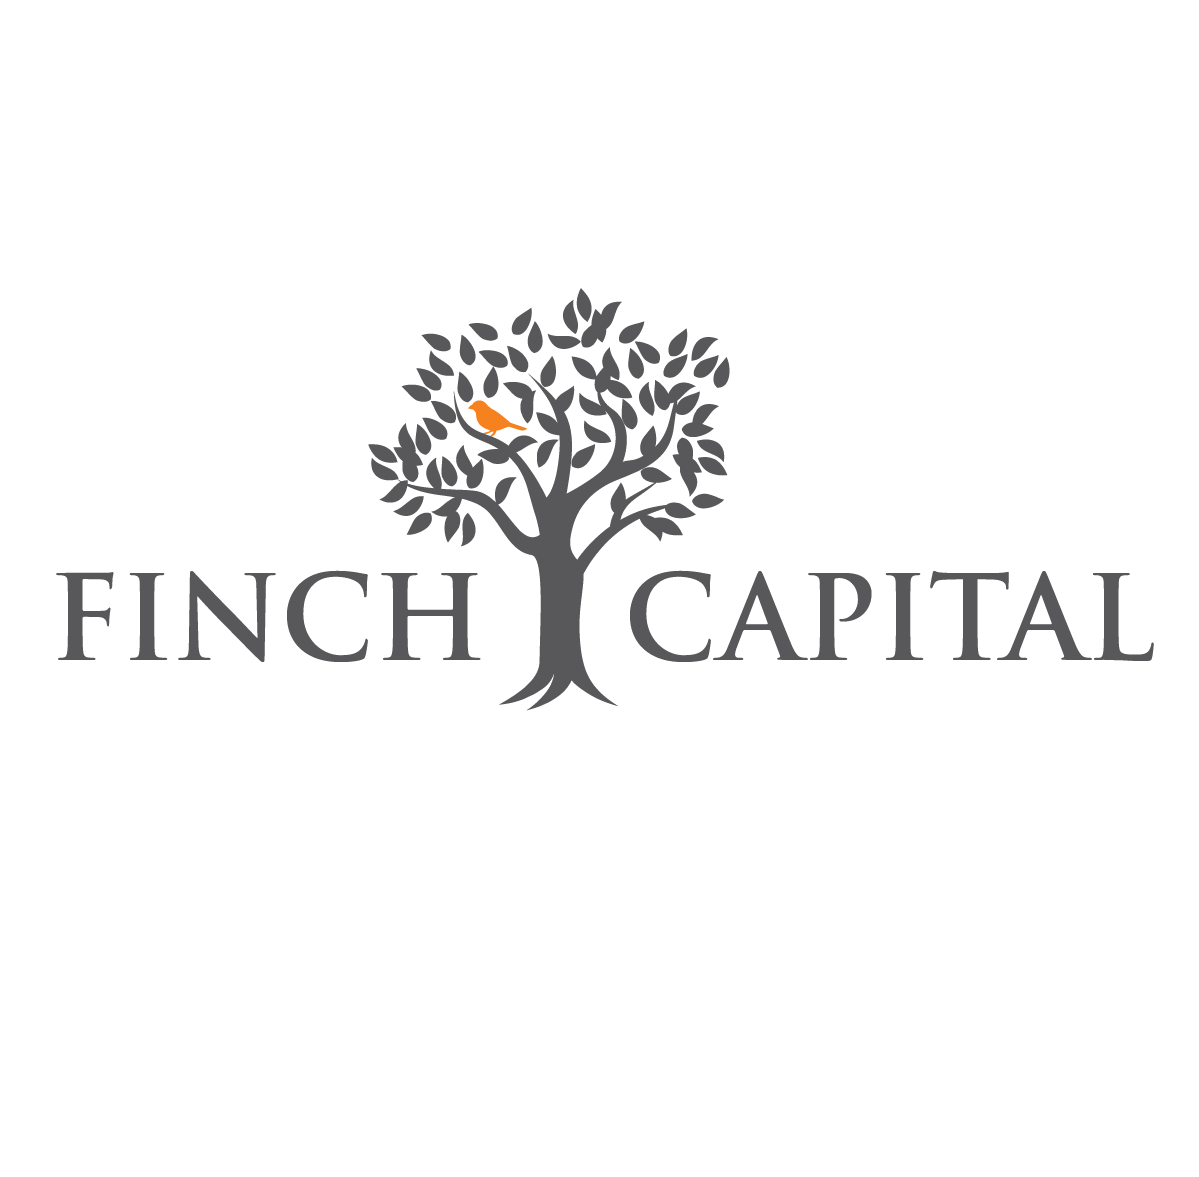 Finch Capital logo